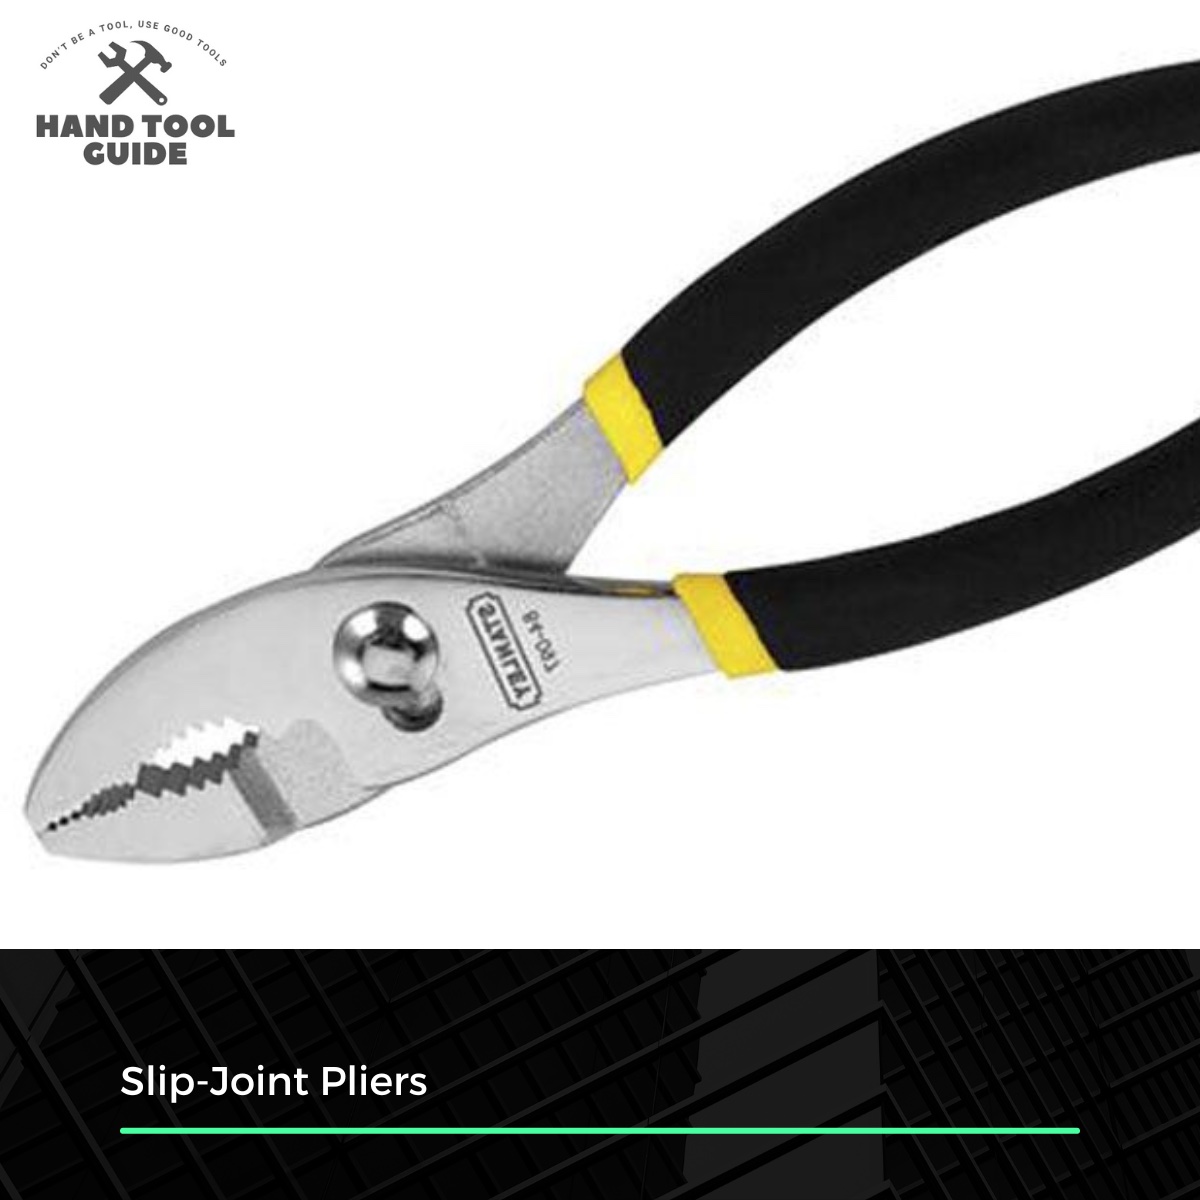 Slip-Joint Pliers